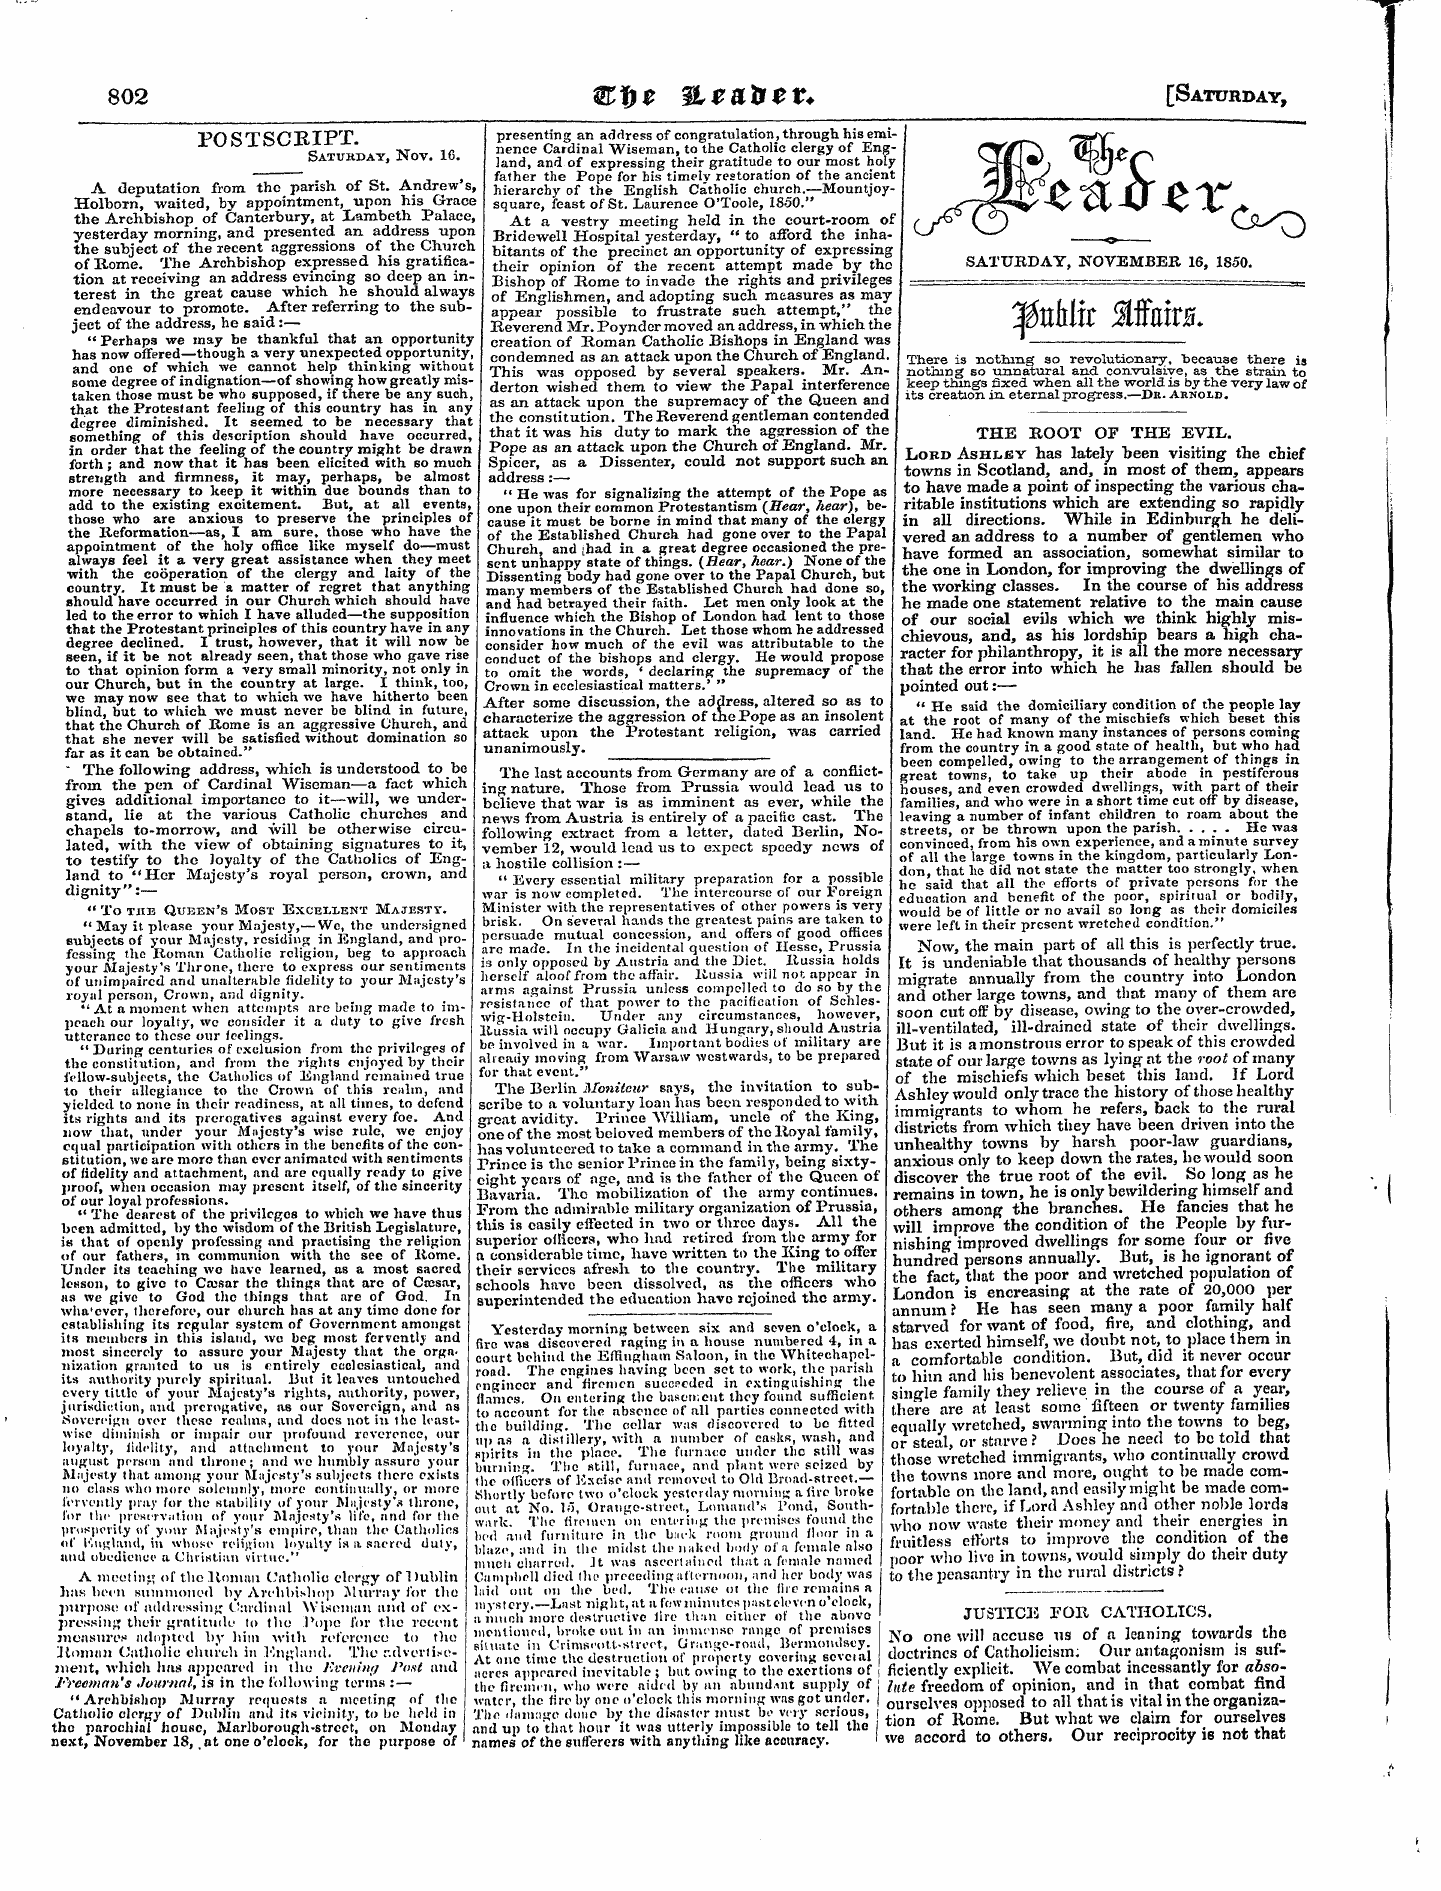 Leader (1850-1860): jS F Y, Town edition - Postscbipt. Saturday, Nov. 16.